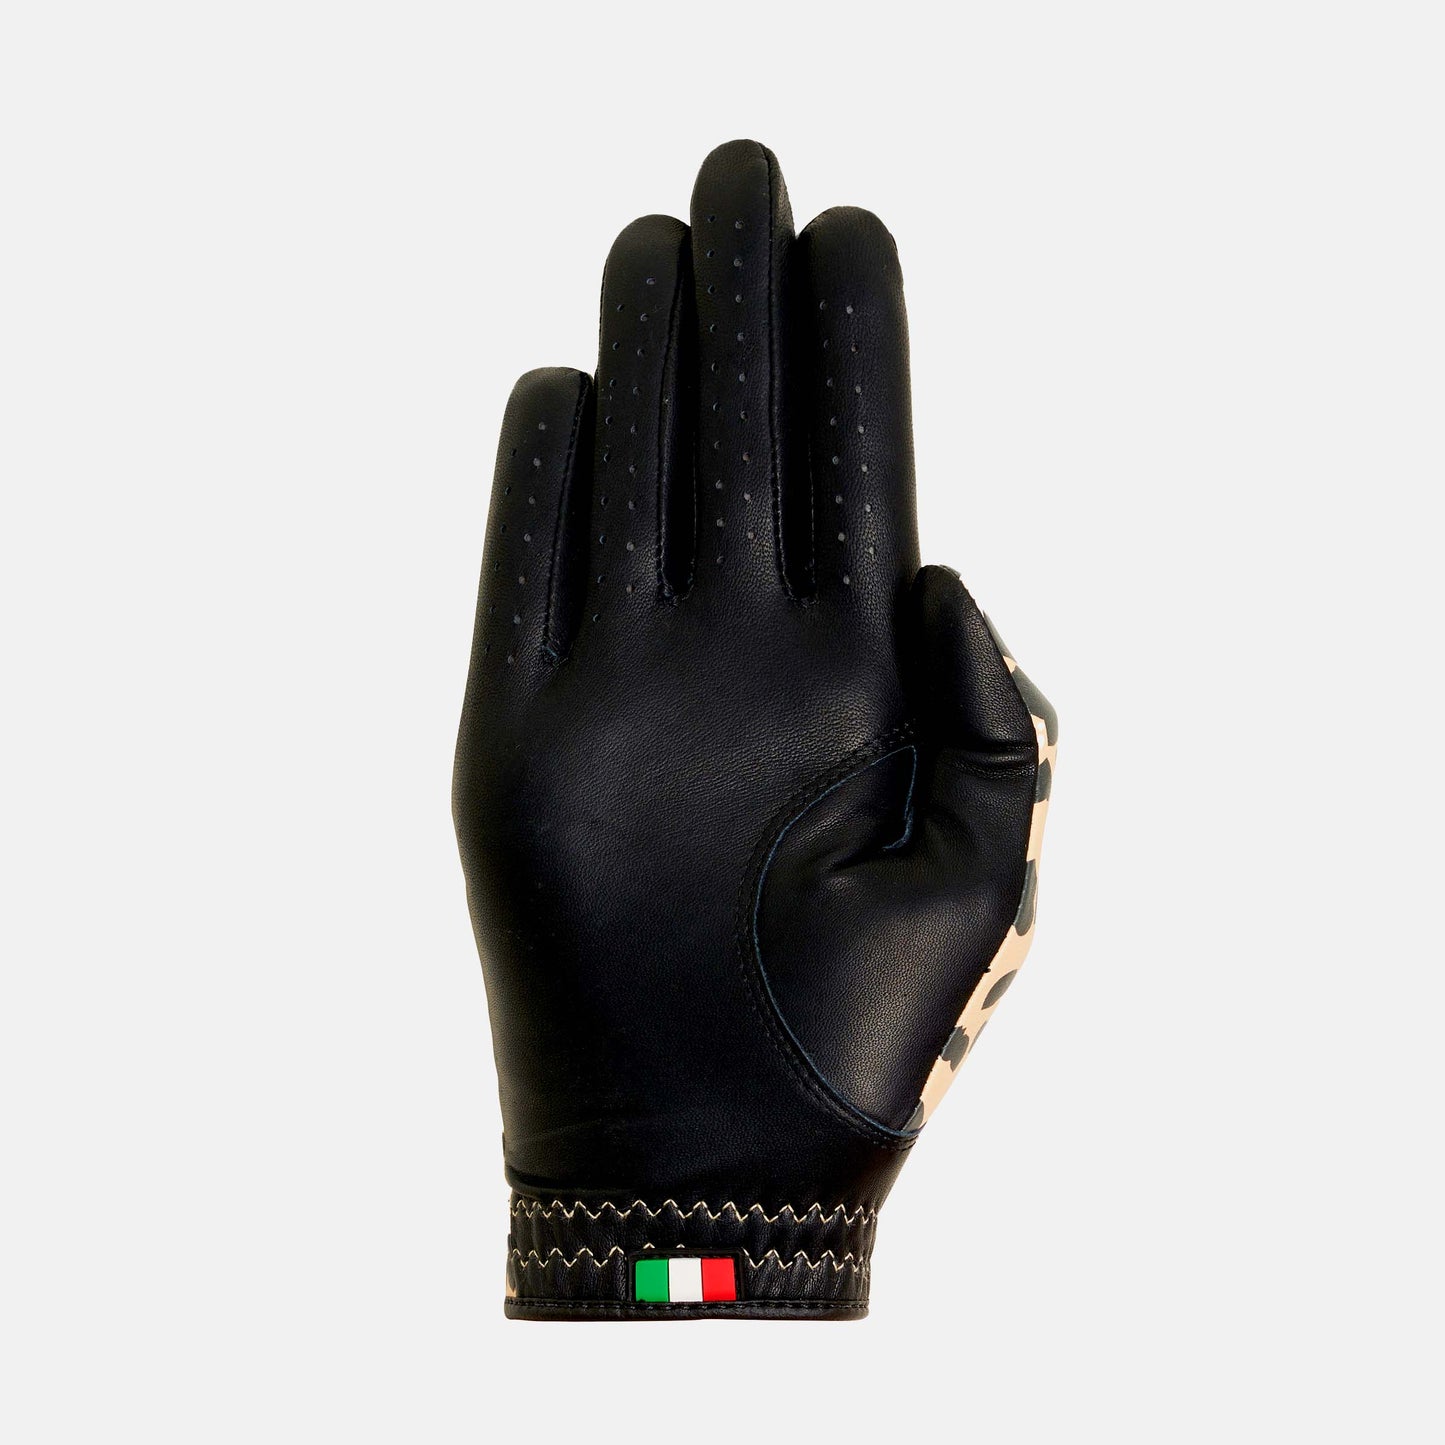 Designer Pro right golf glove for women's in Black/Cheetah print